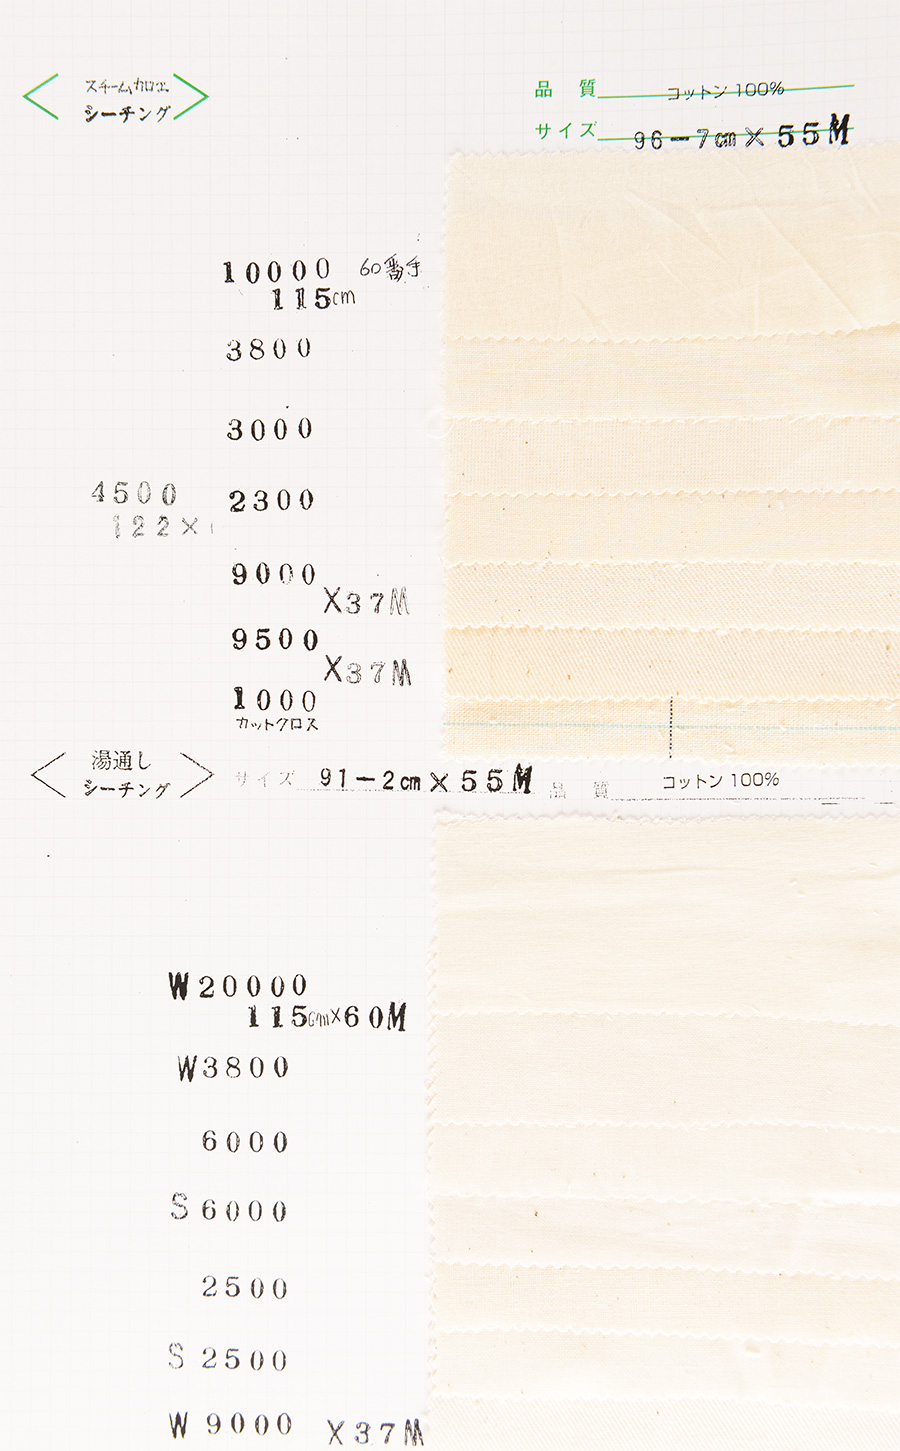 W10000 블라우스, 원피스, 슈트용 박지 광목(탕통) Tokai Textile